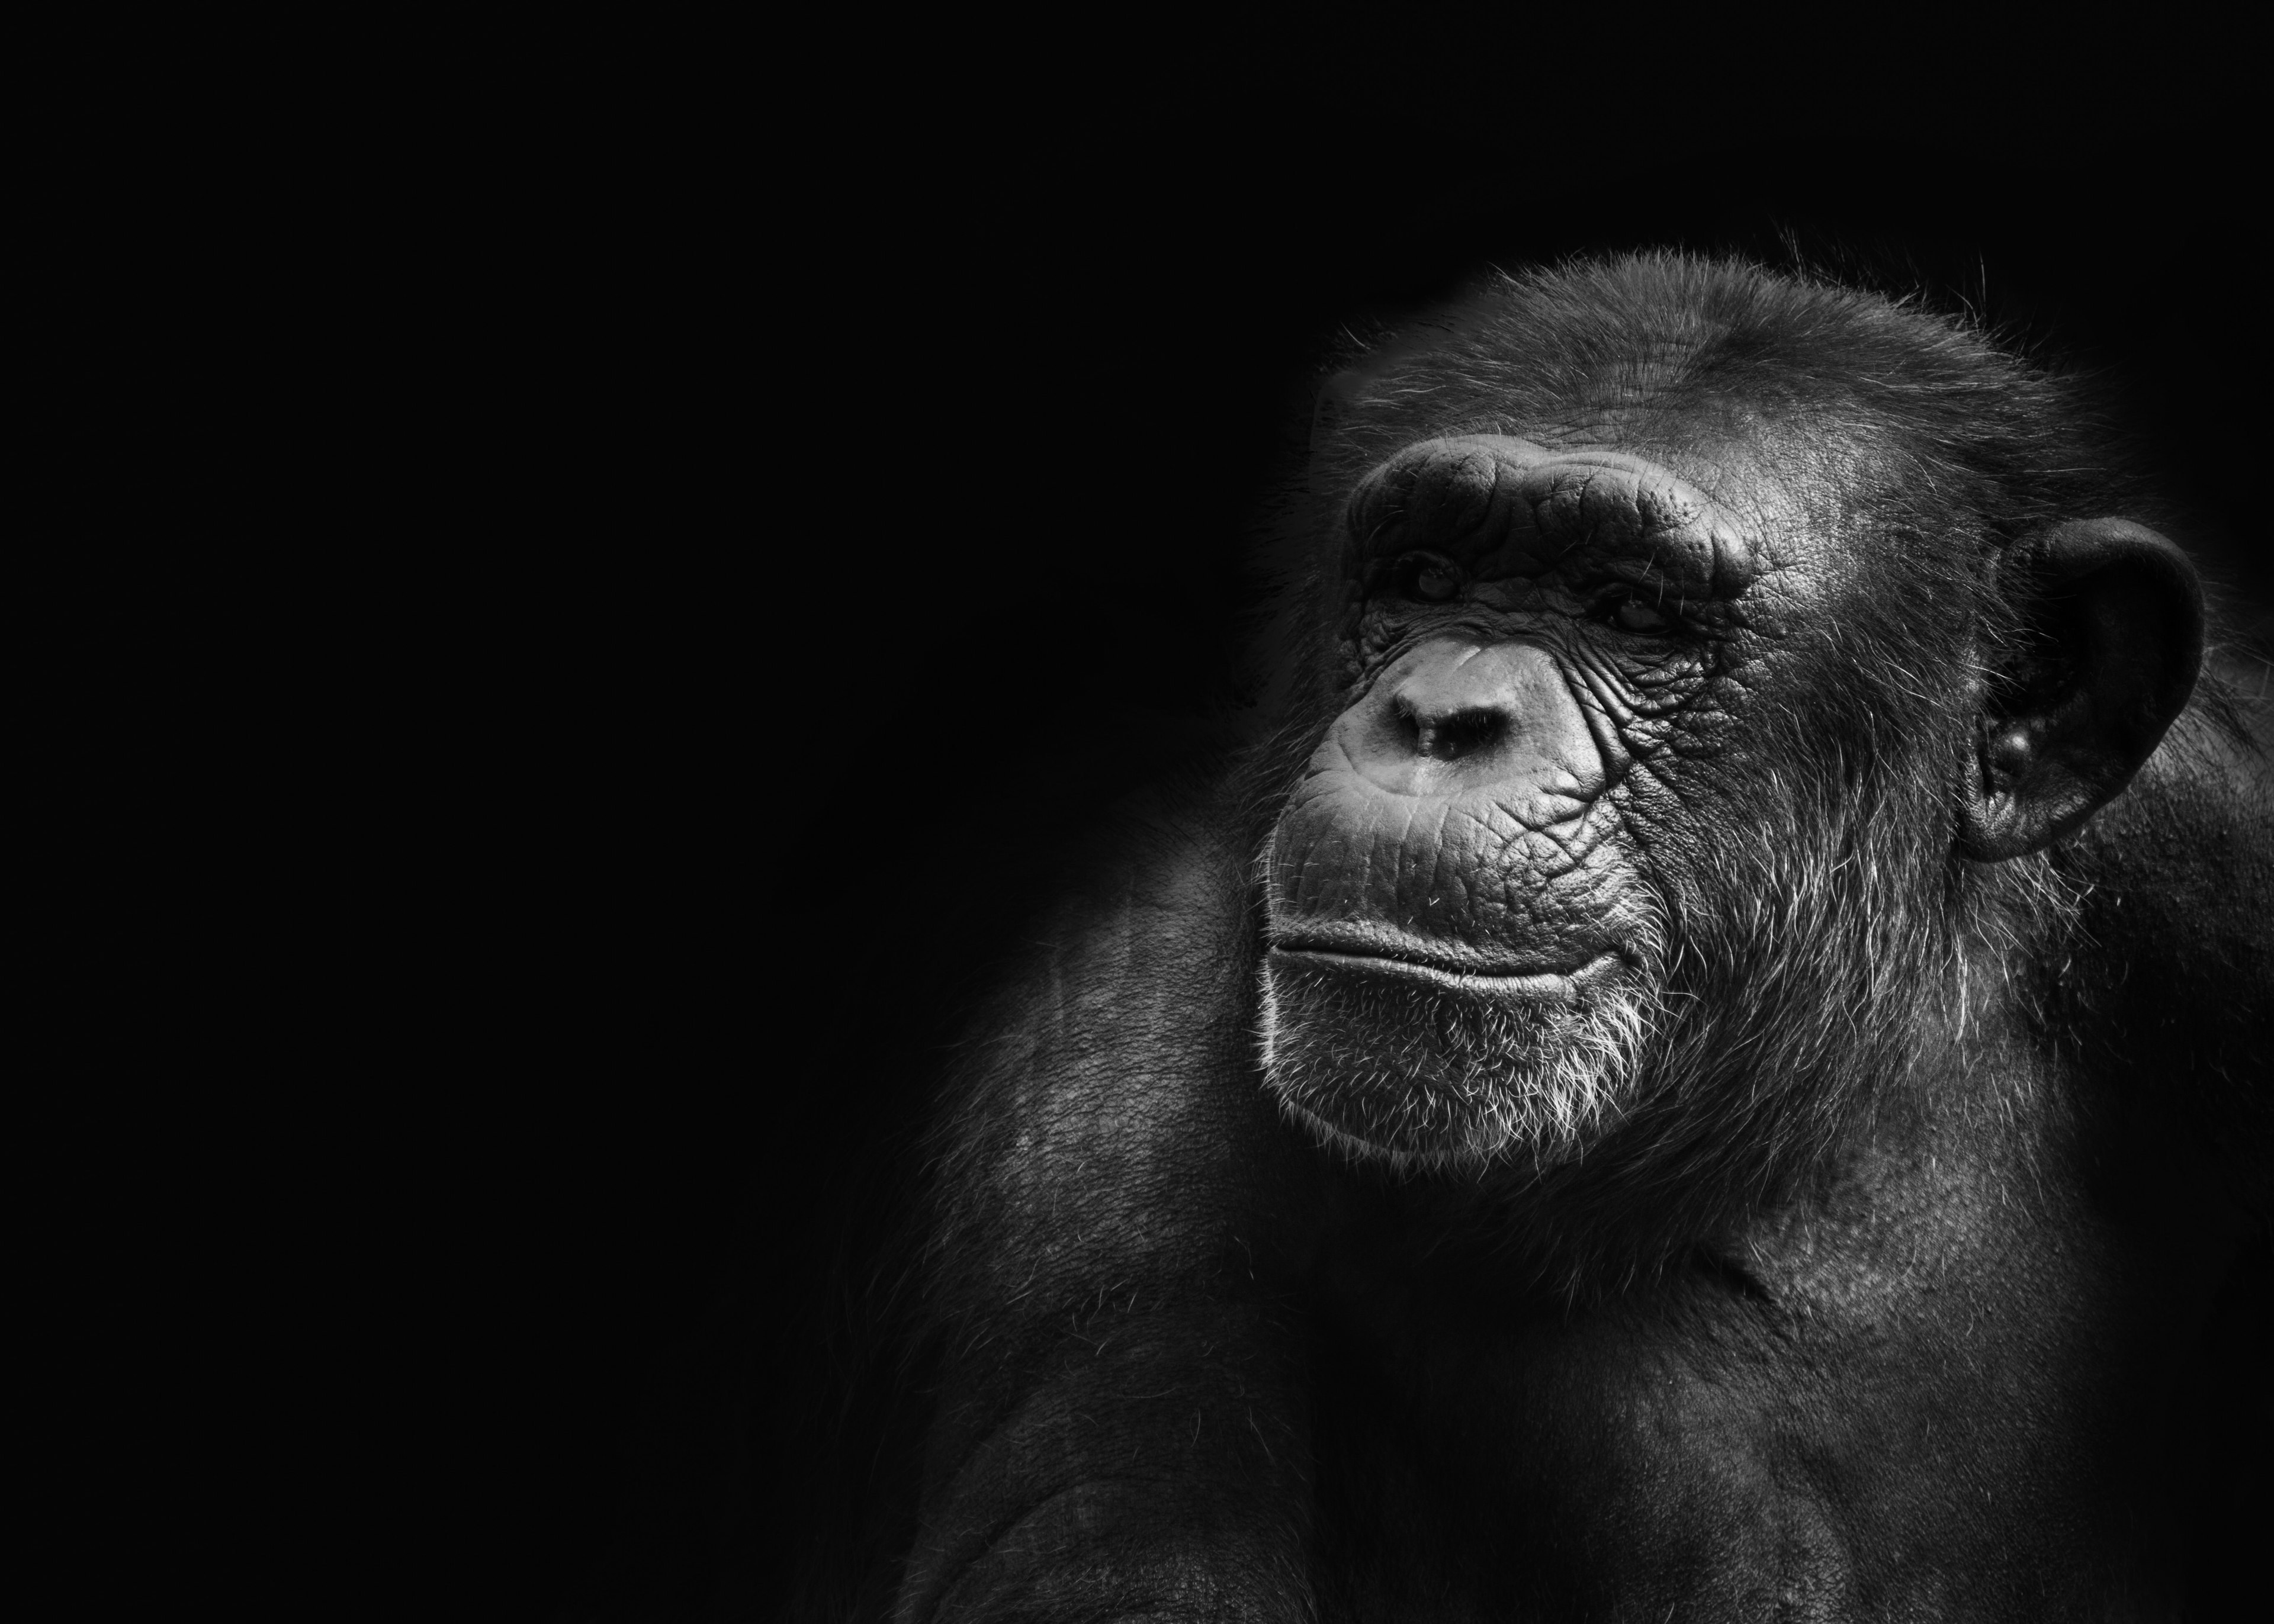 chimpanzee against a black background